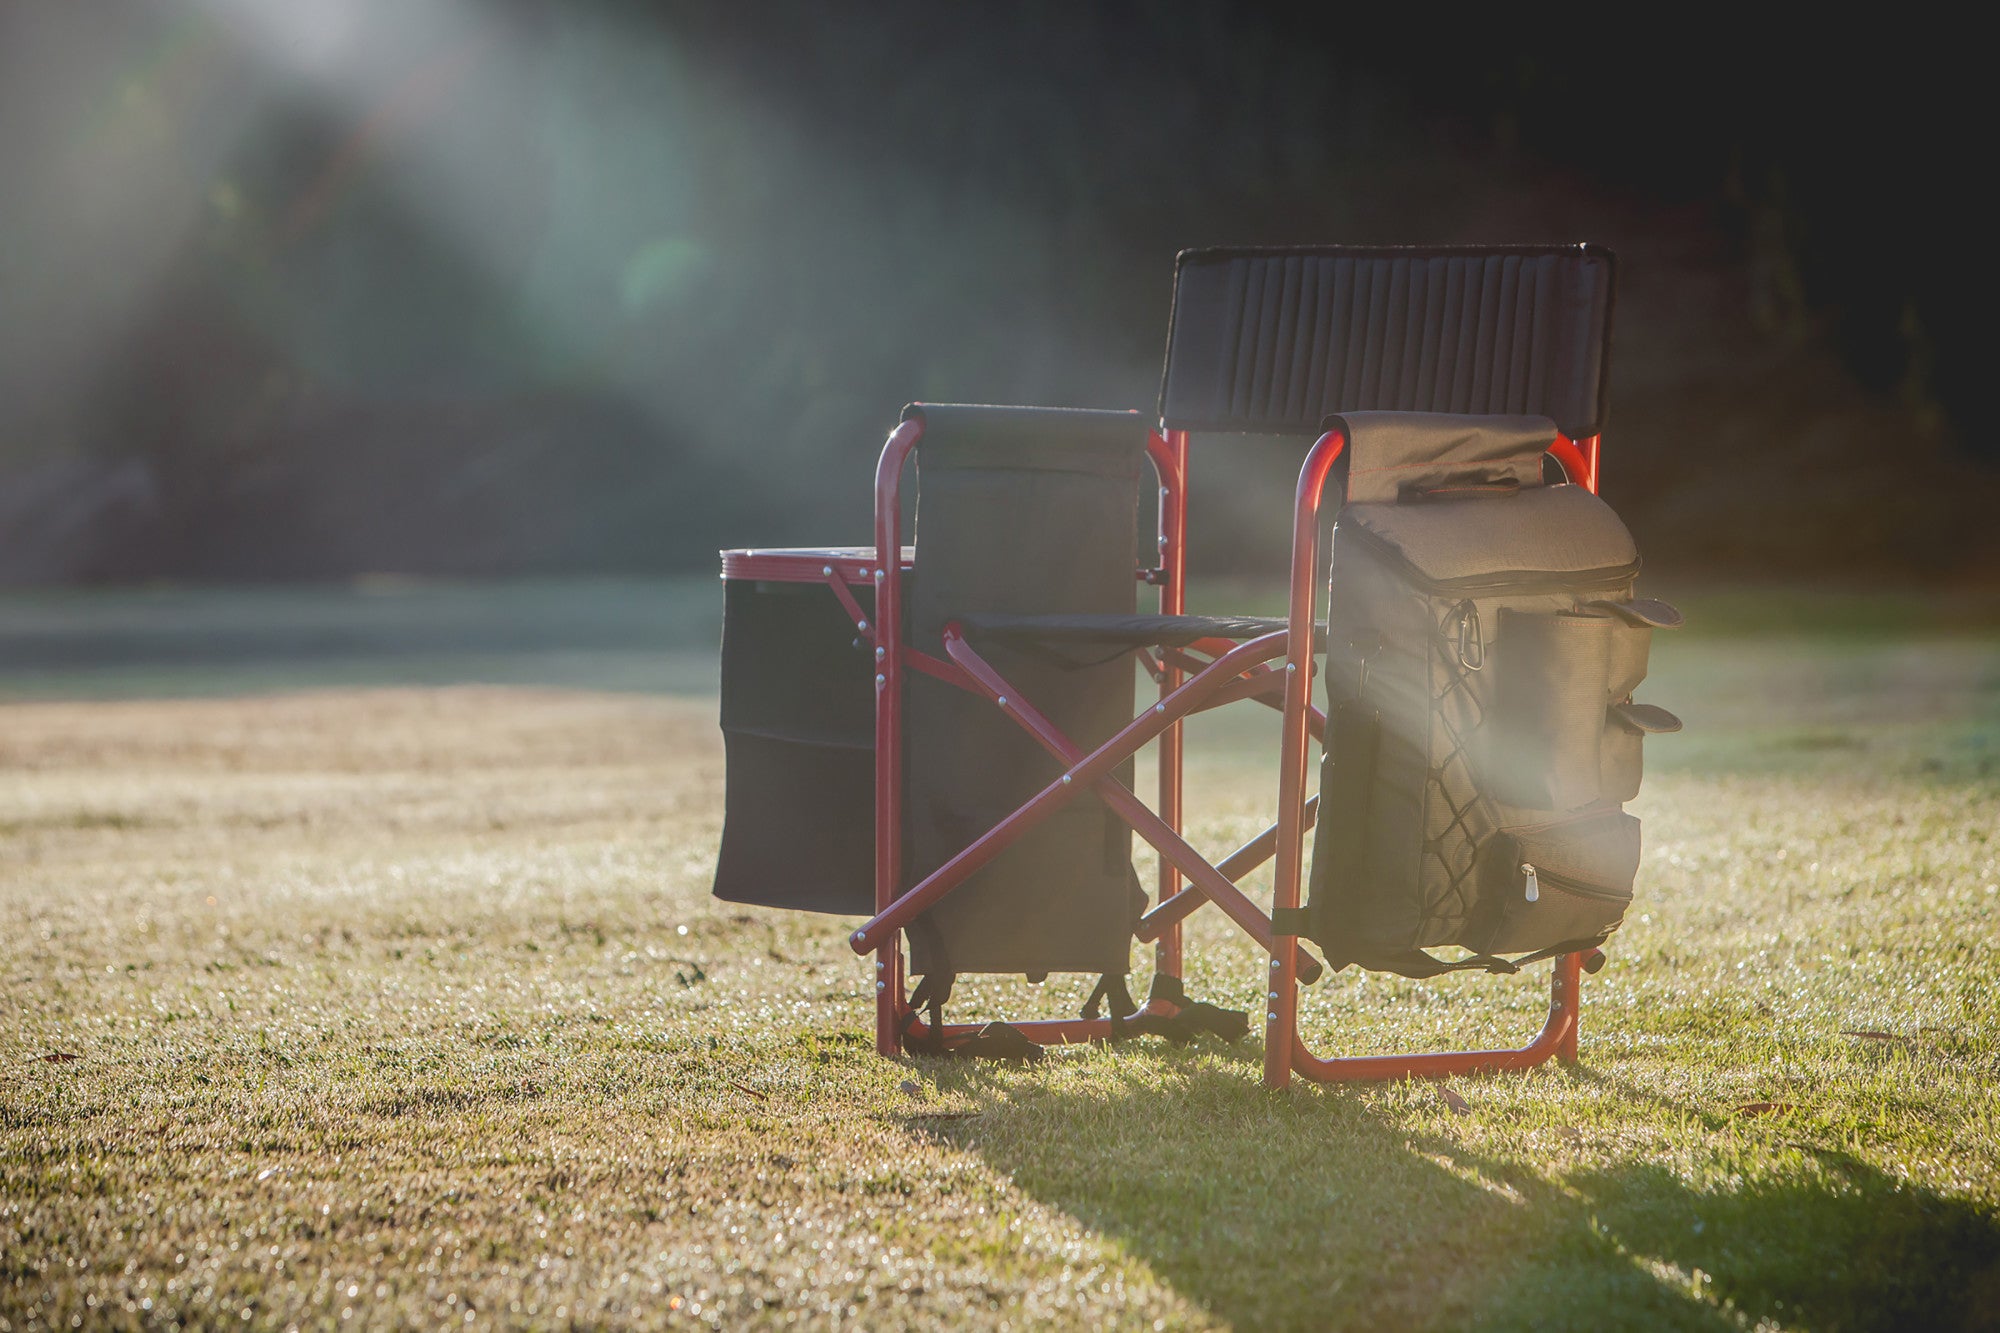 Oklahoma Sooners - Fusion Camping Chair